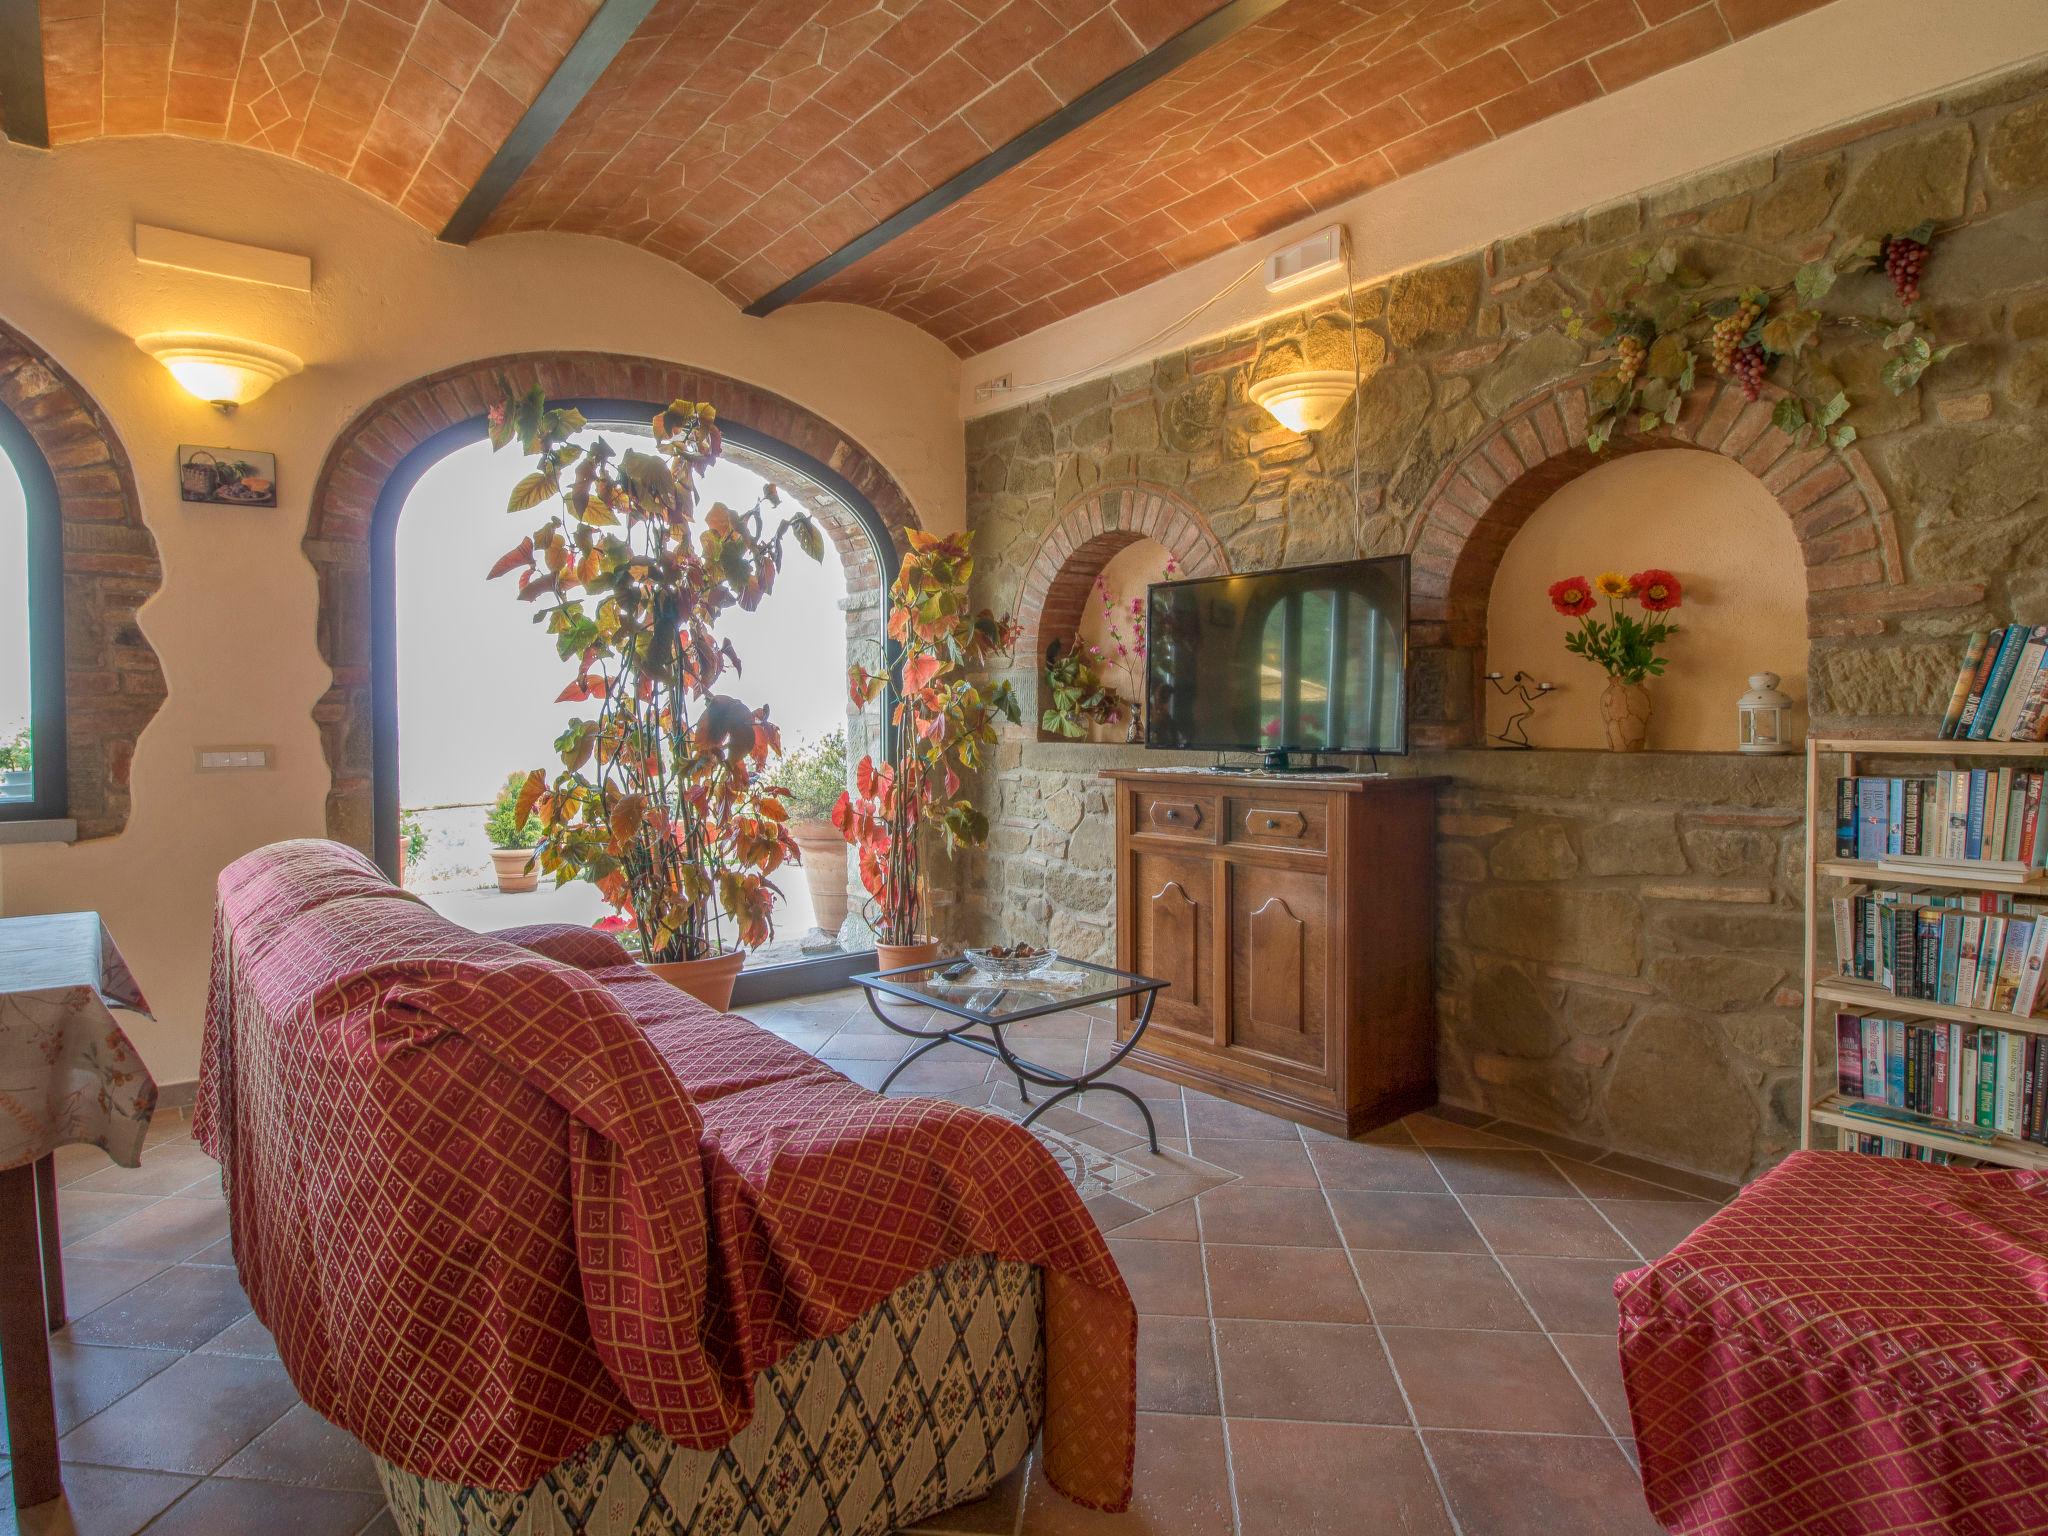 Foto 7 - Haus mit 5 Schlafzimmern in Civitella in Val di Chiana mit privater pool und terrasse